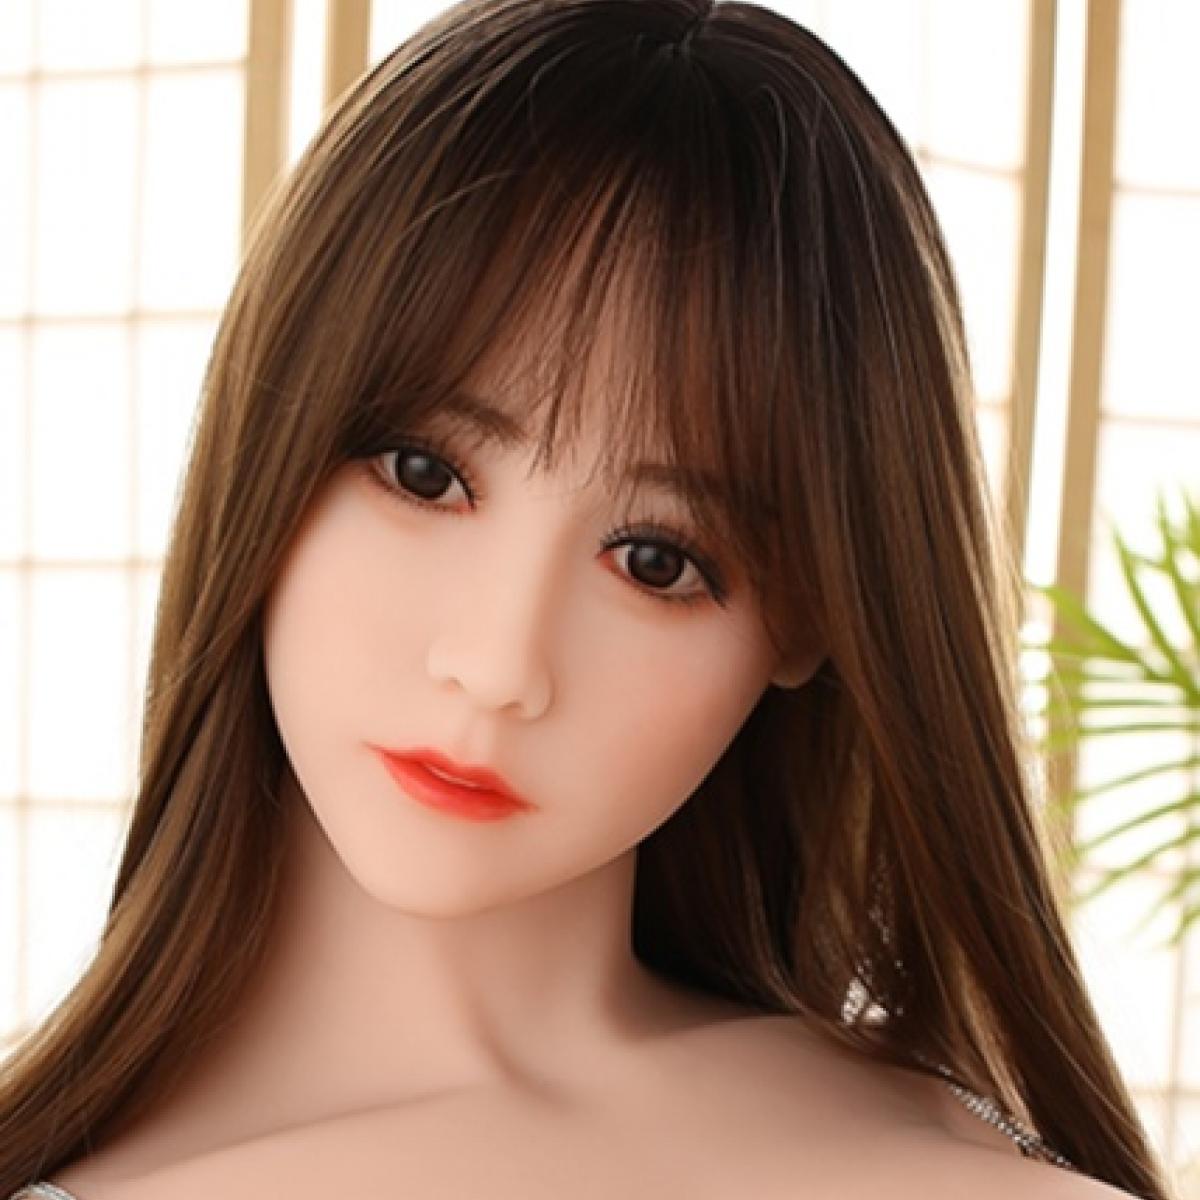 Firedoll - Ayumi - Sex Doll Head - M16 Compatible - Natural